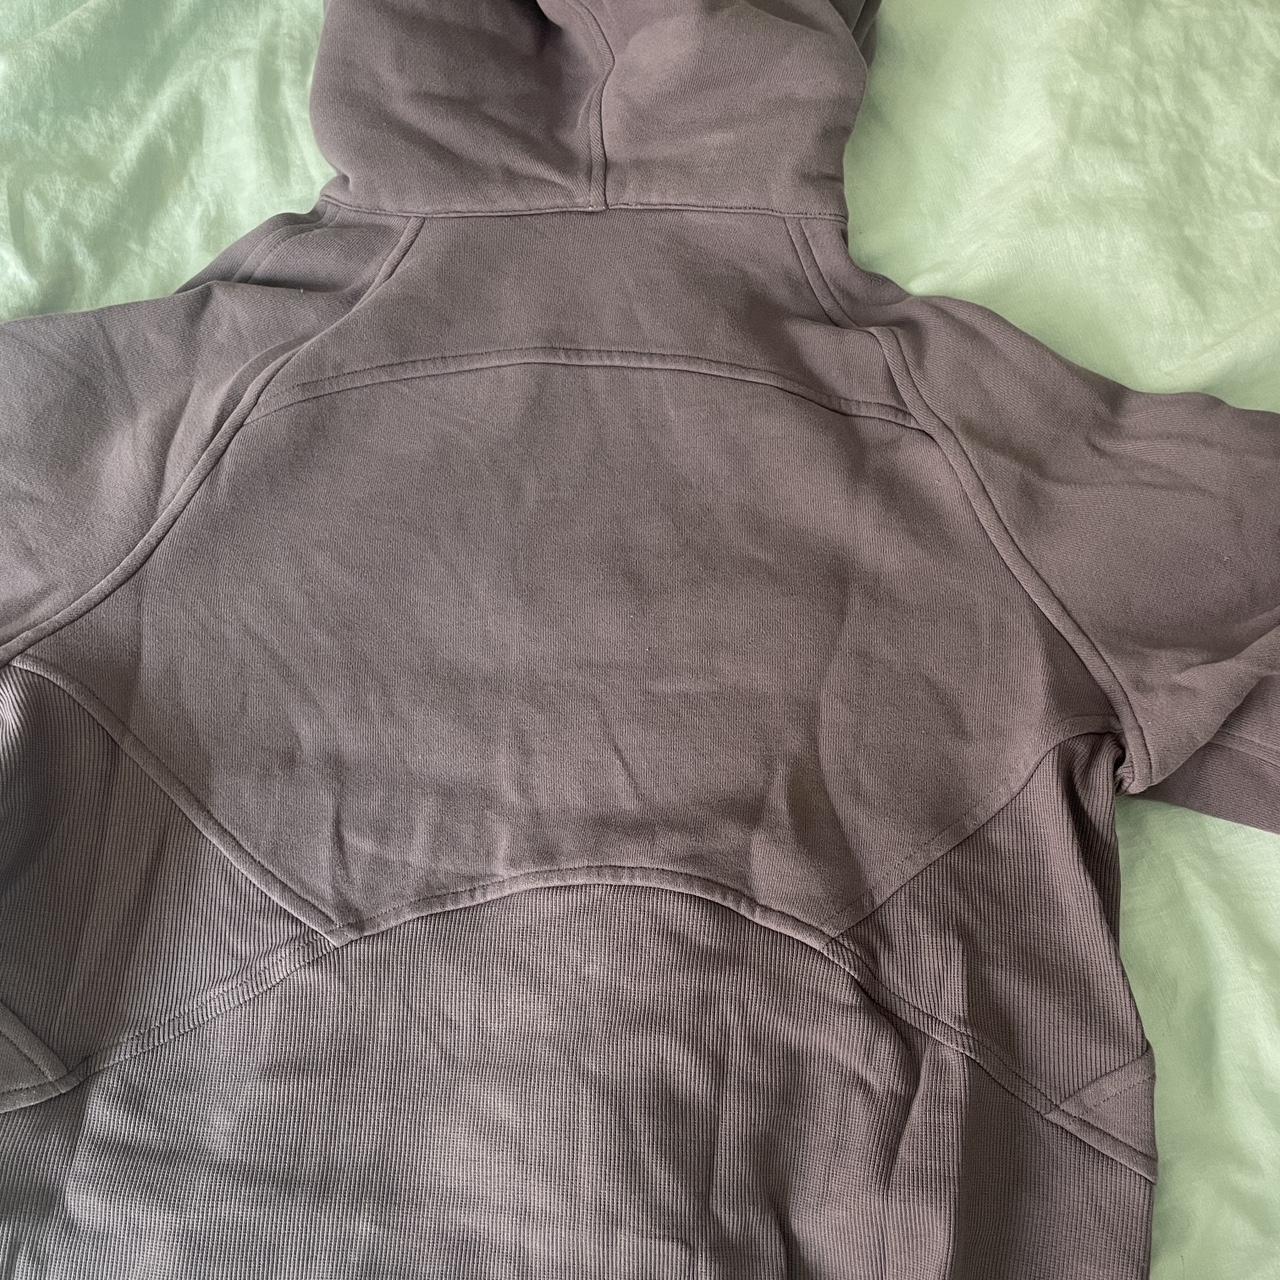 Lululemon scuba oversized full zip hoodie - size